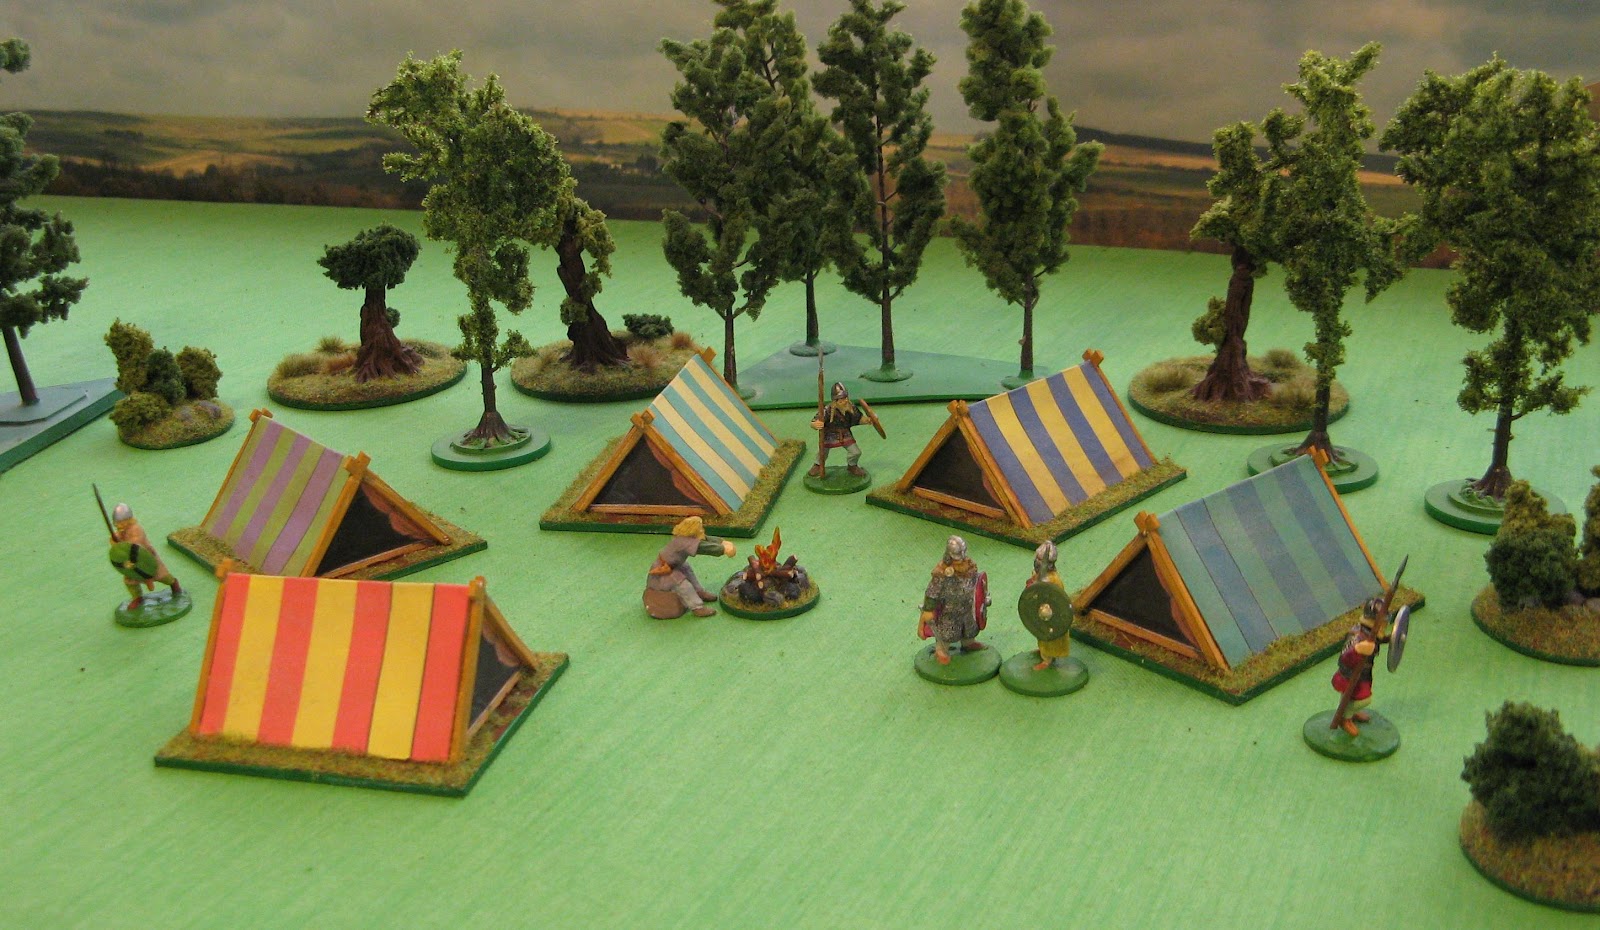 Wooden Tents